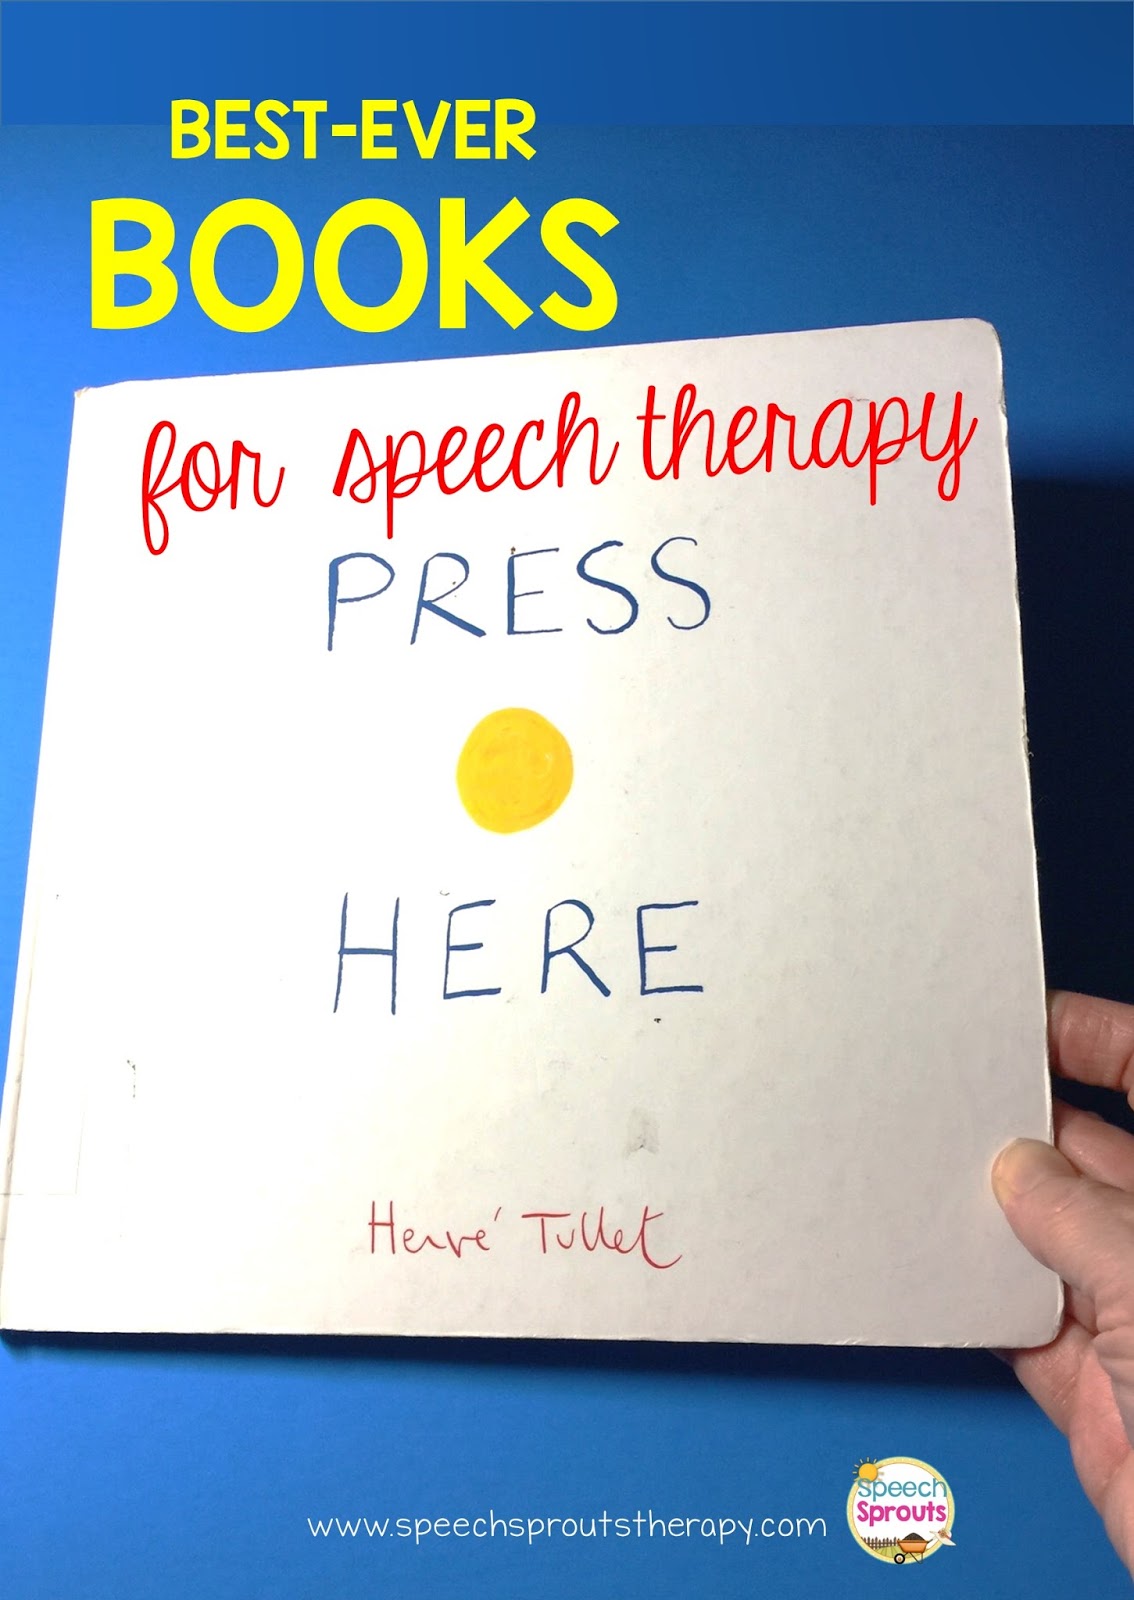 best books for speech writing